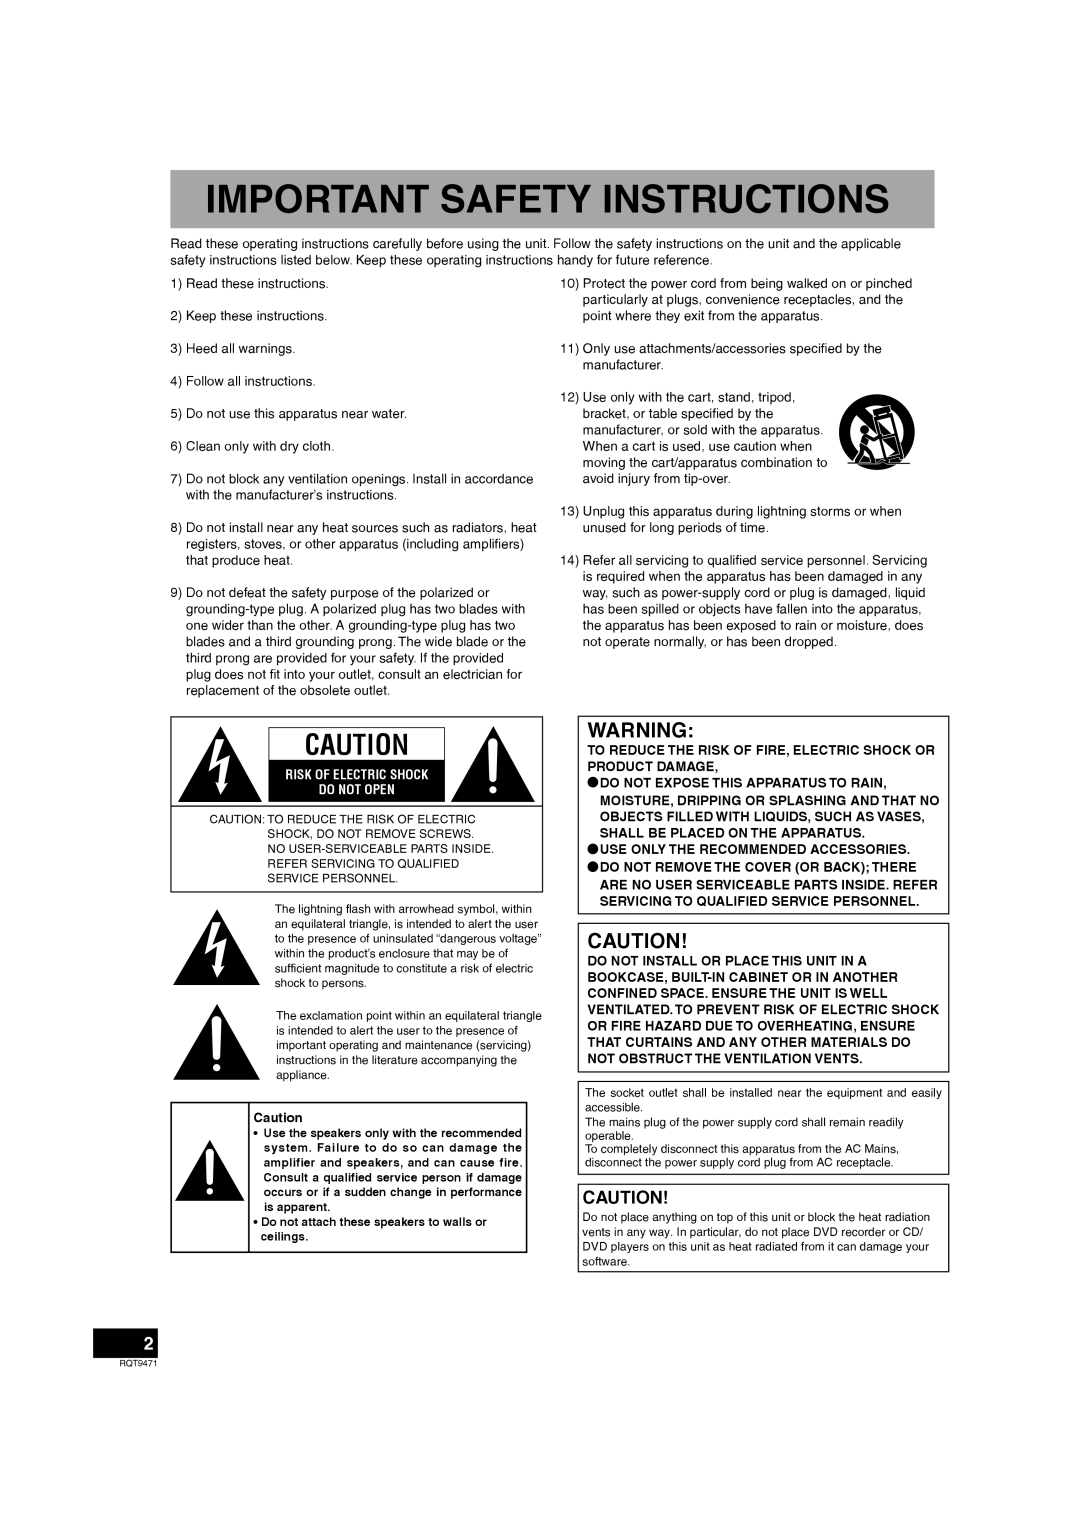 Panasonic SC-ZT1 warranty Important Safety Instructions, Risk Of Electric Shock Do Not Open 